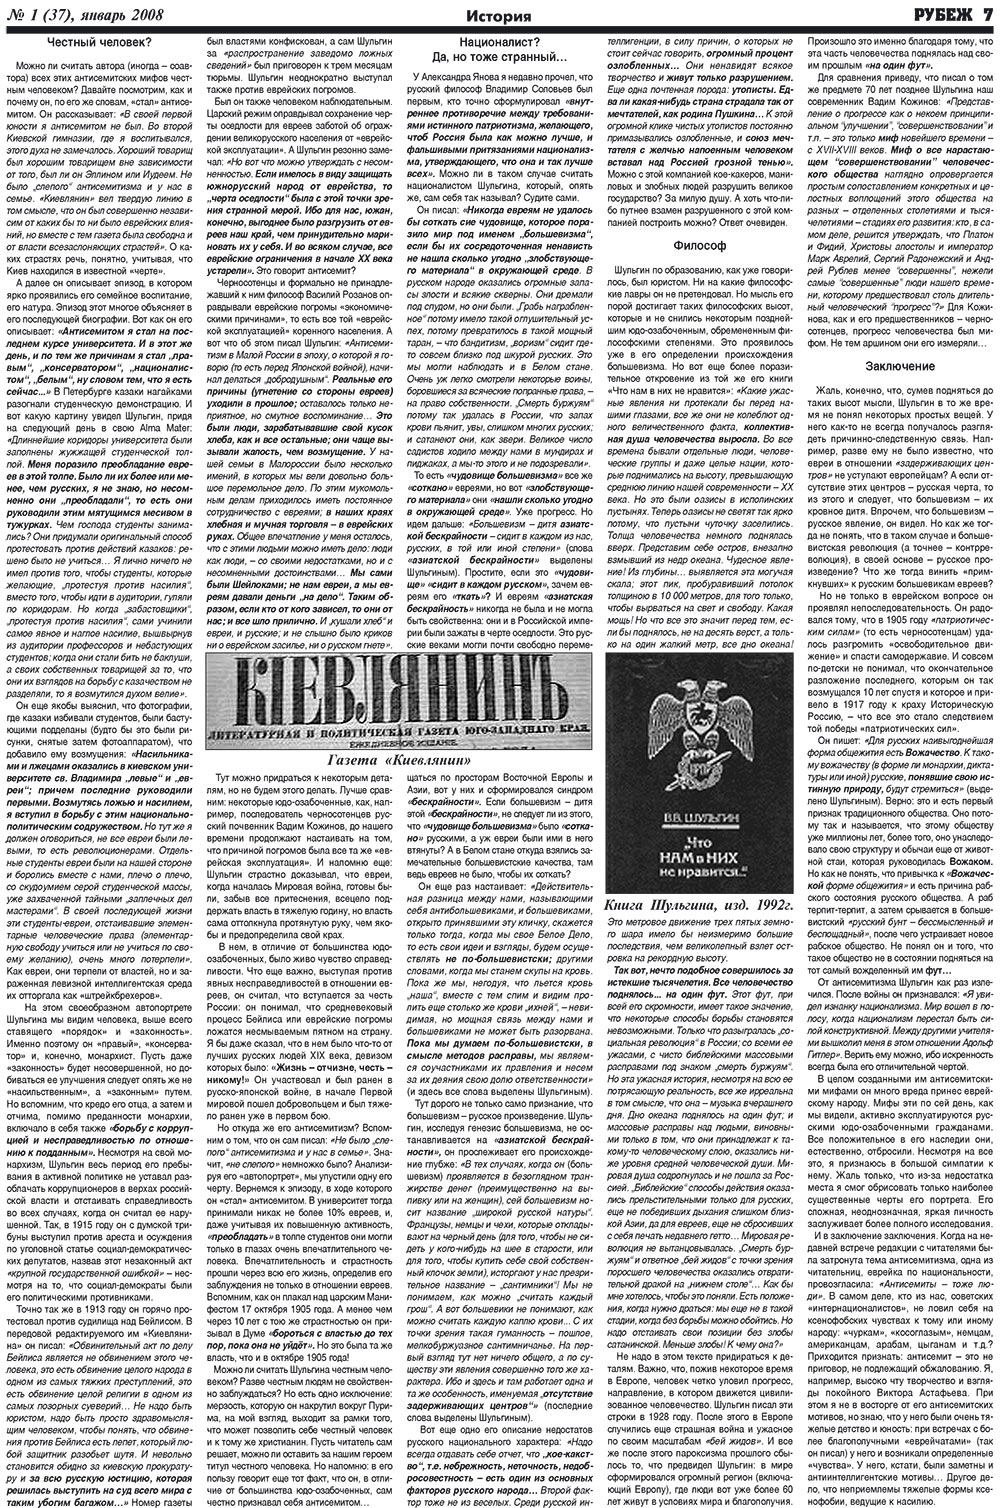 Рубеж, газета. 2008 №1 стр.7